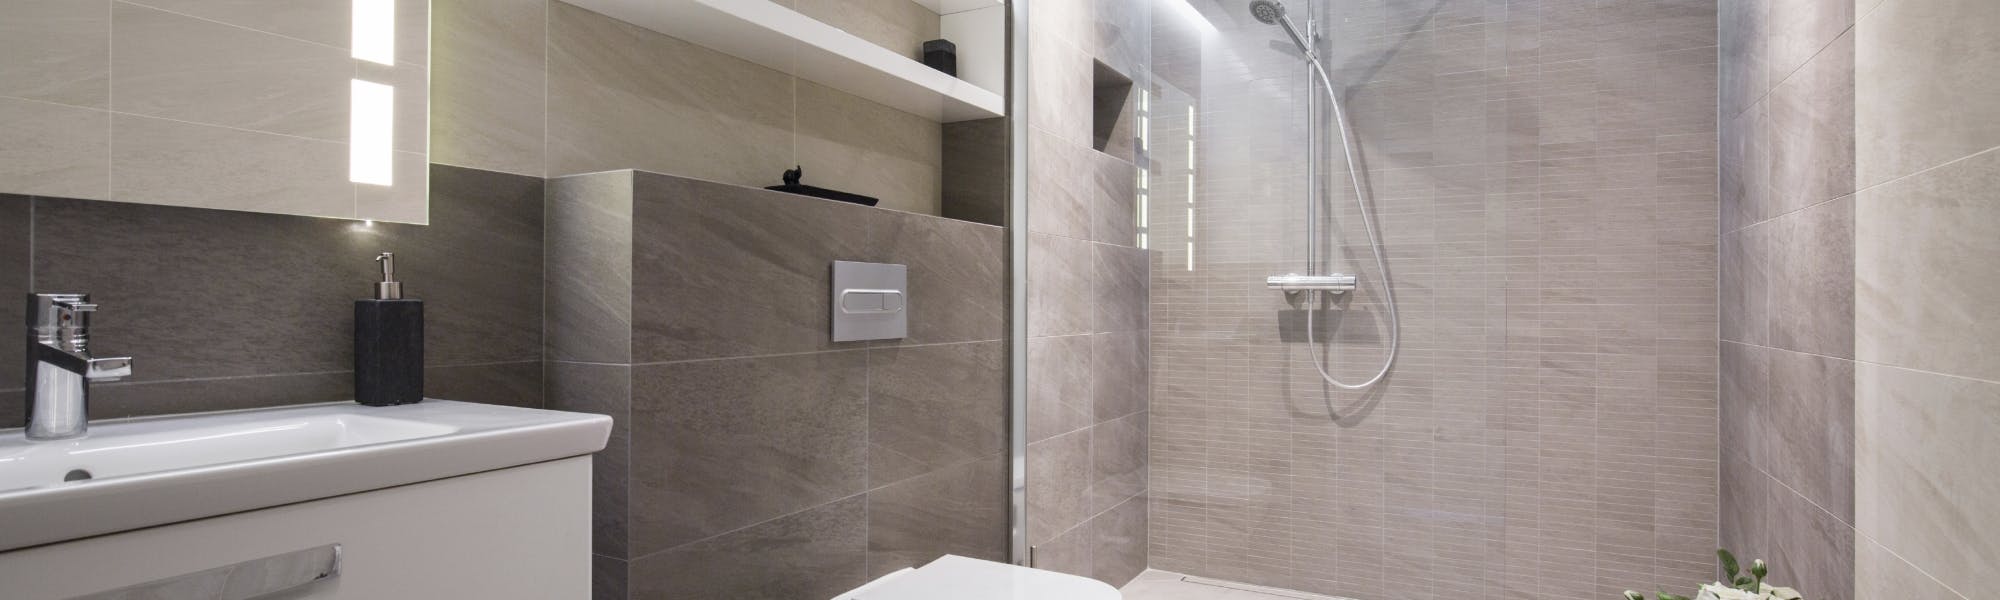 dream shower rooms - designed, supplied & installed